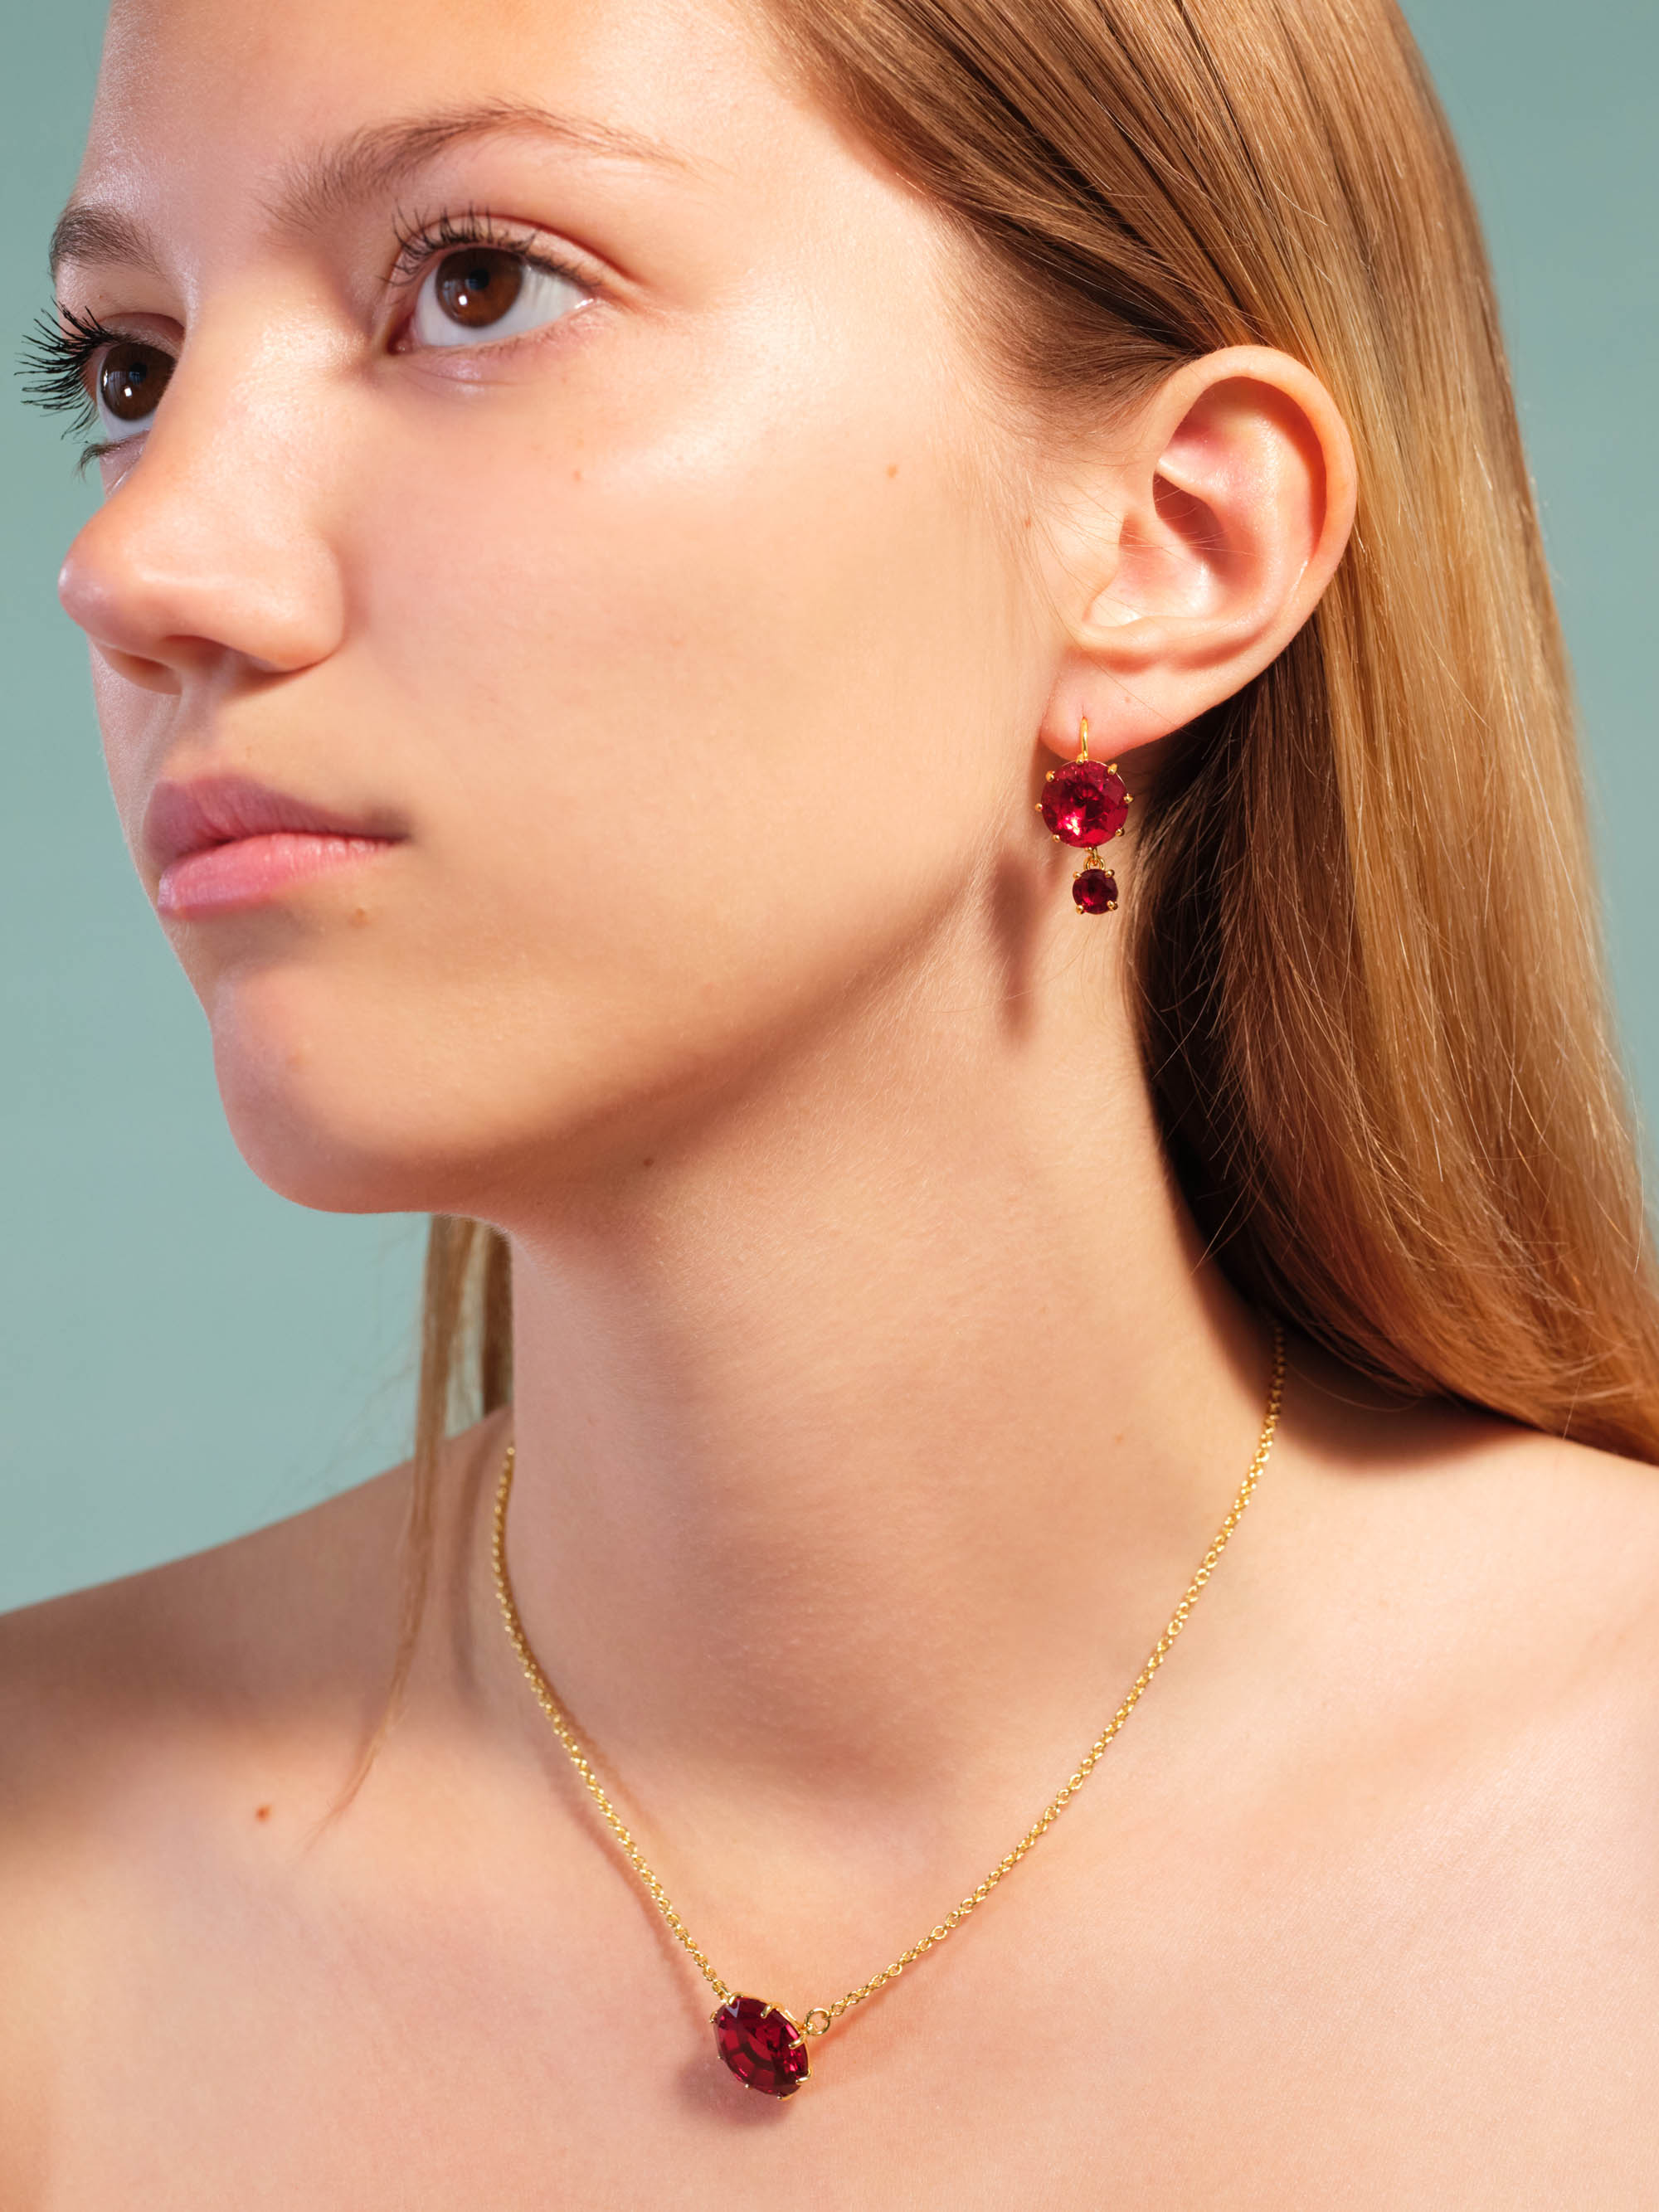 Garnet red diamantine Round stone post earrings